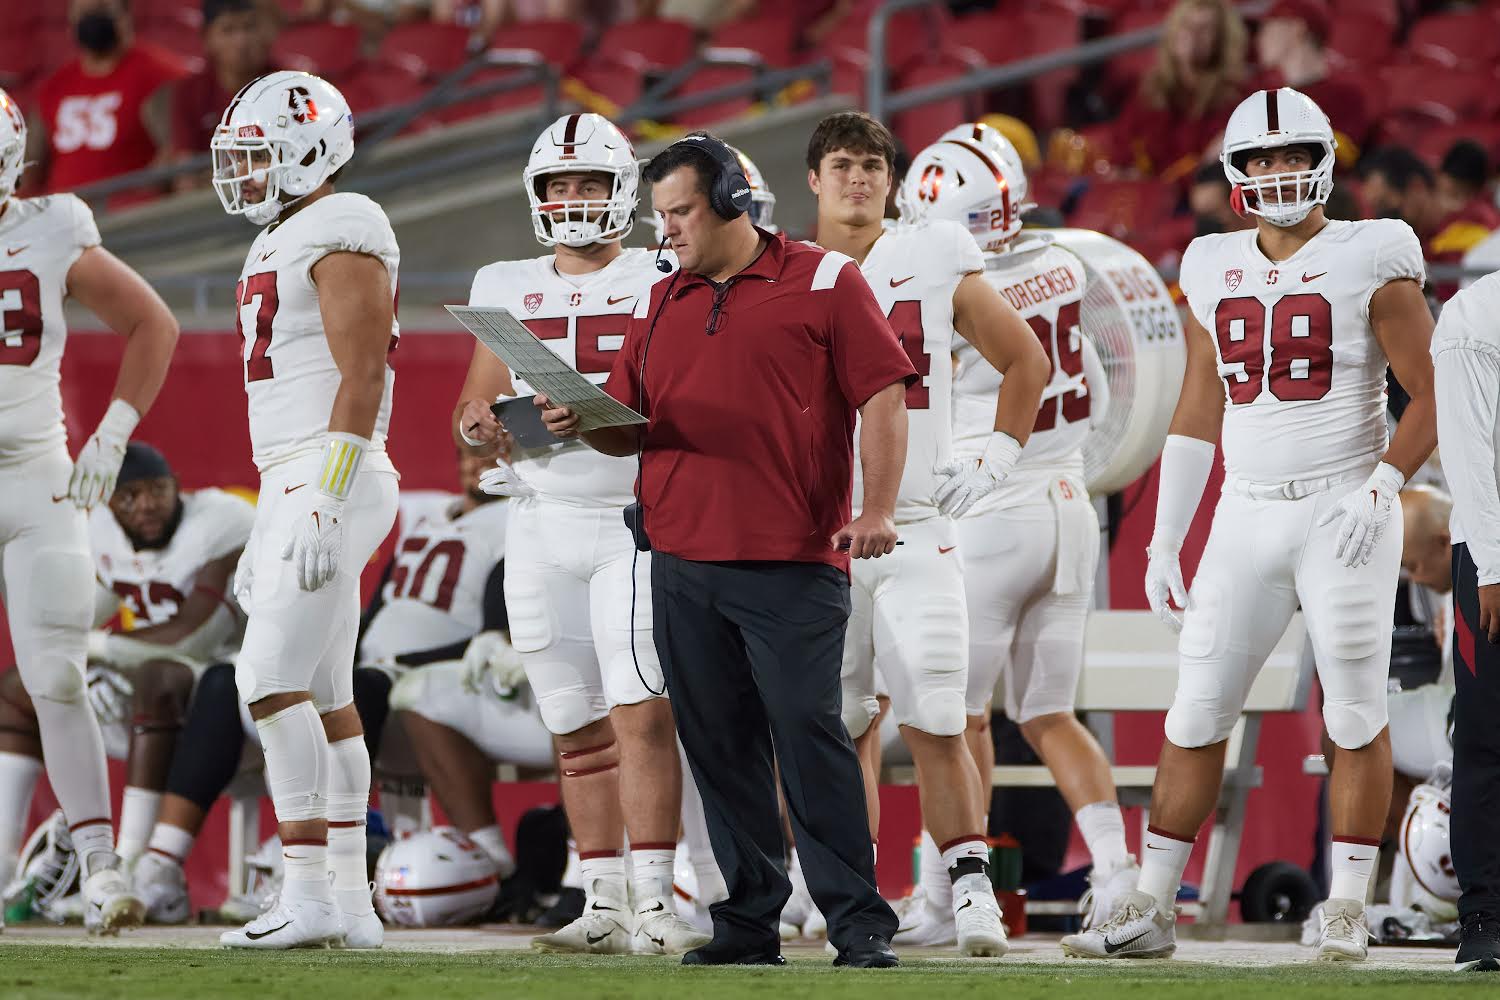 UVA names Stanford's Heffernan as new offensive line coach